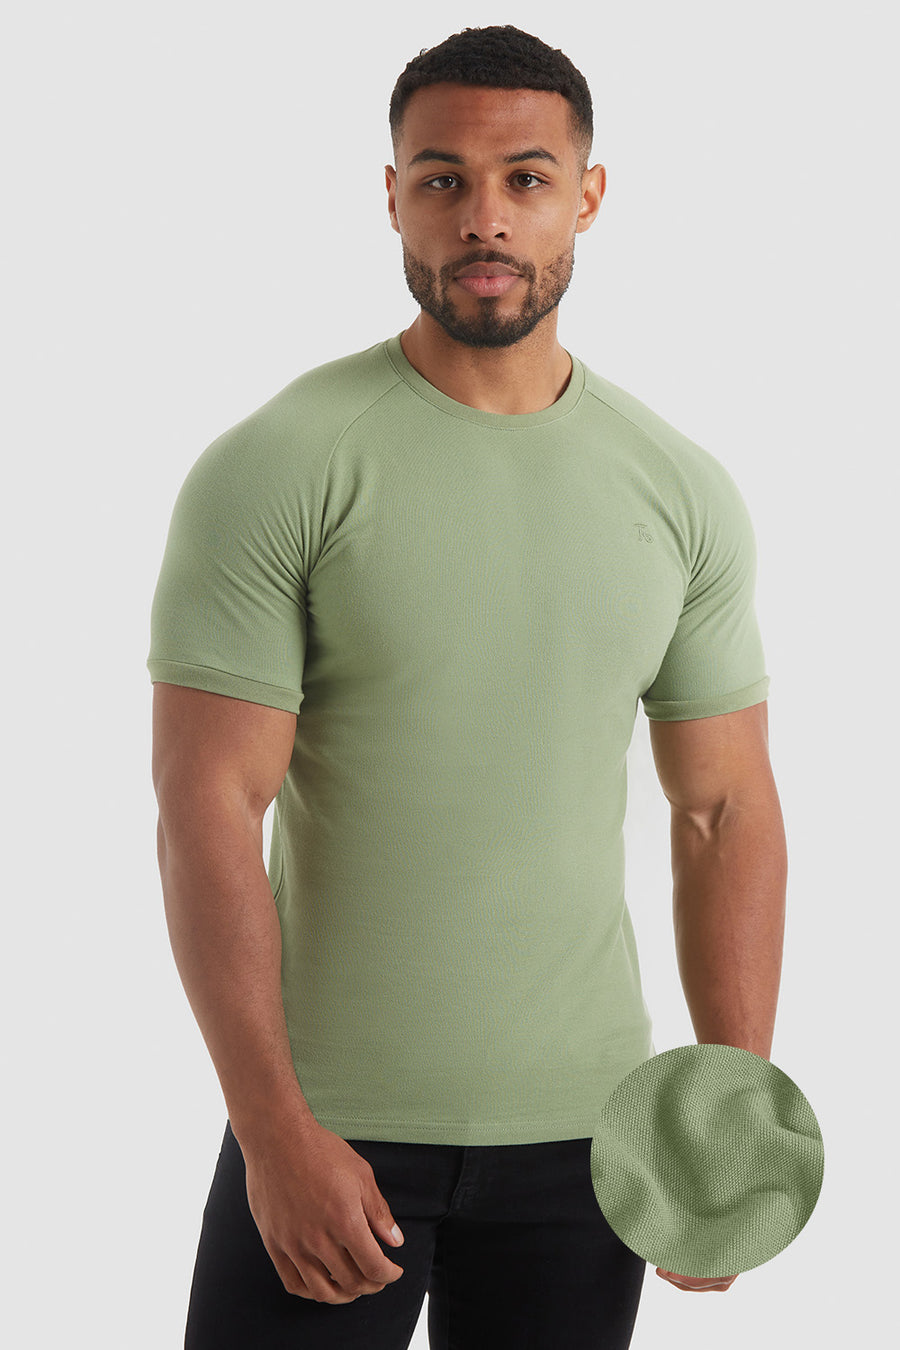 Pique T-Shirt in Sage - TAILORED ATHLETE - USA